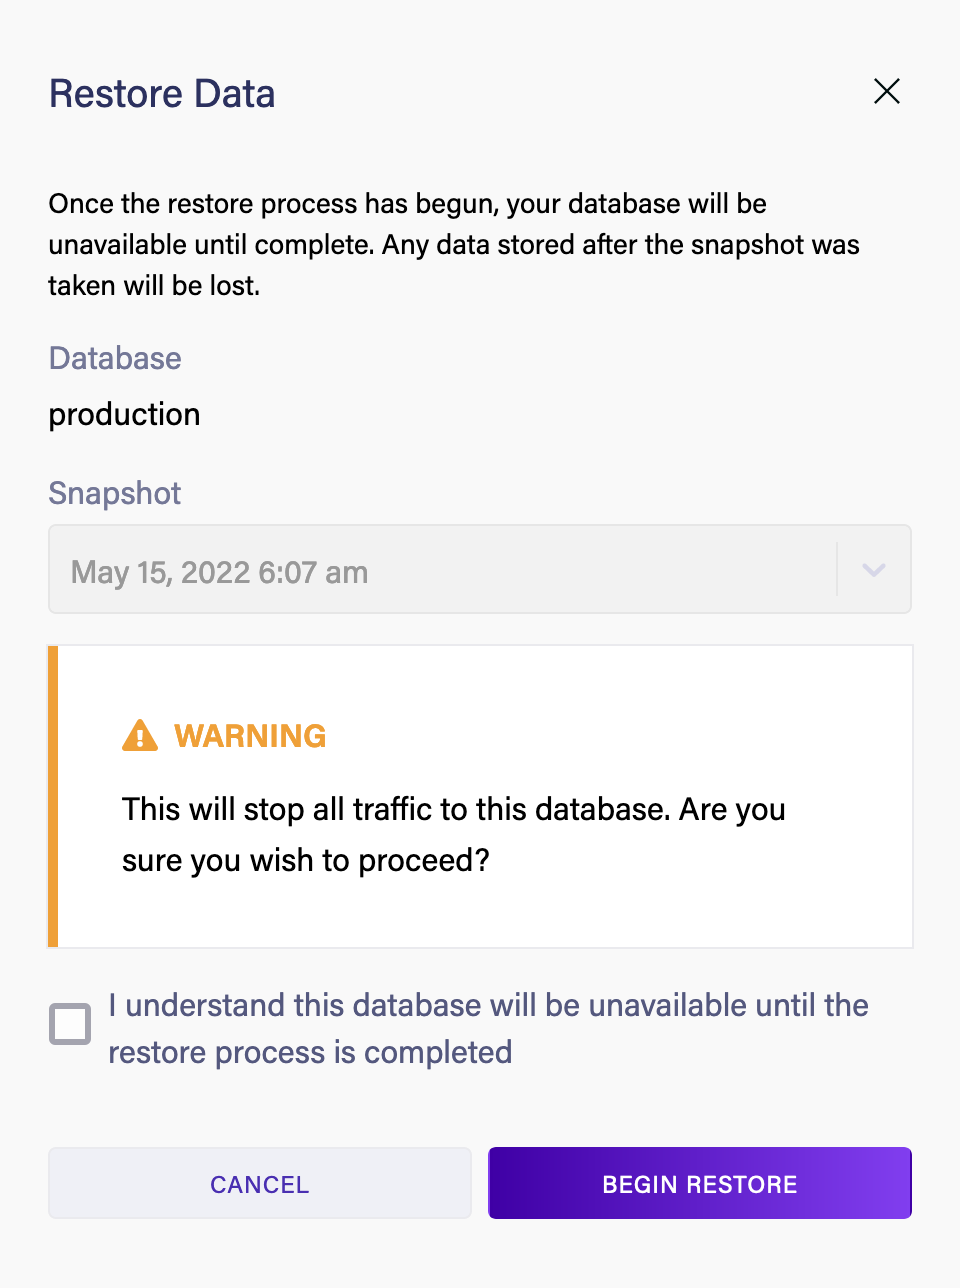 The Dashboard’s Restore Data panel